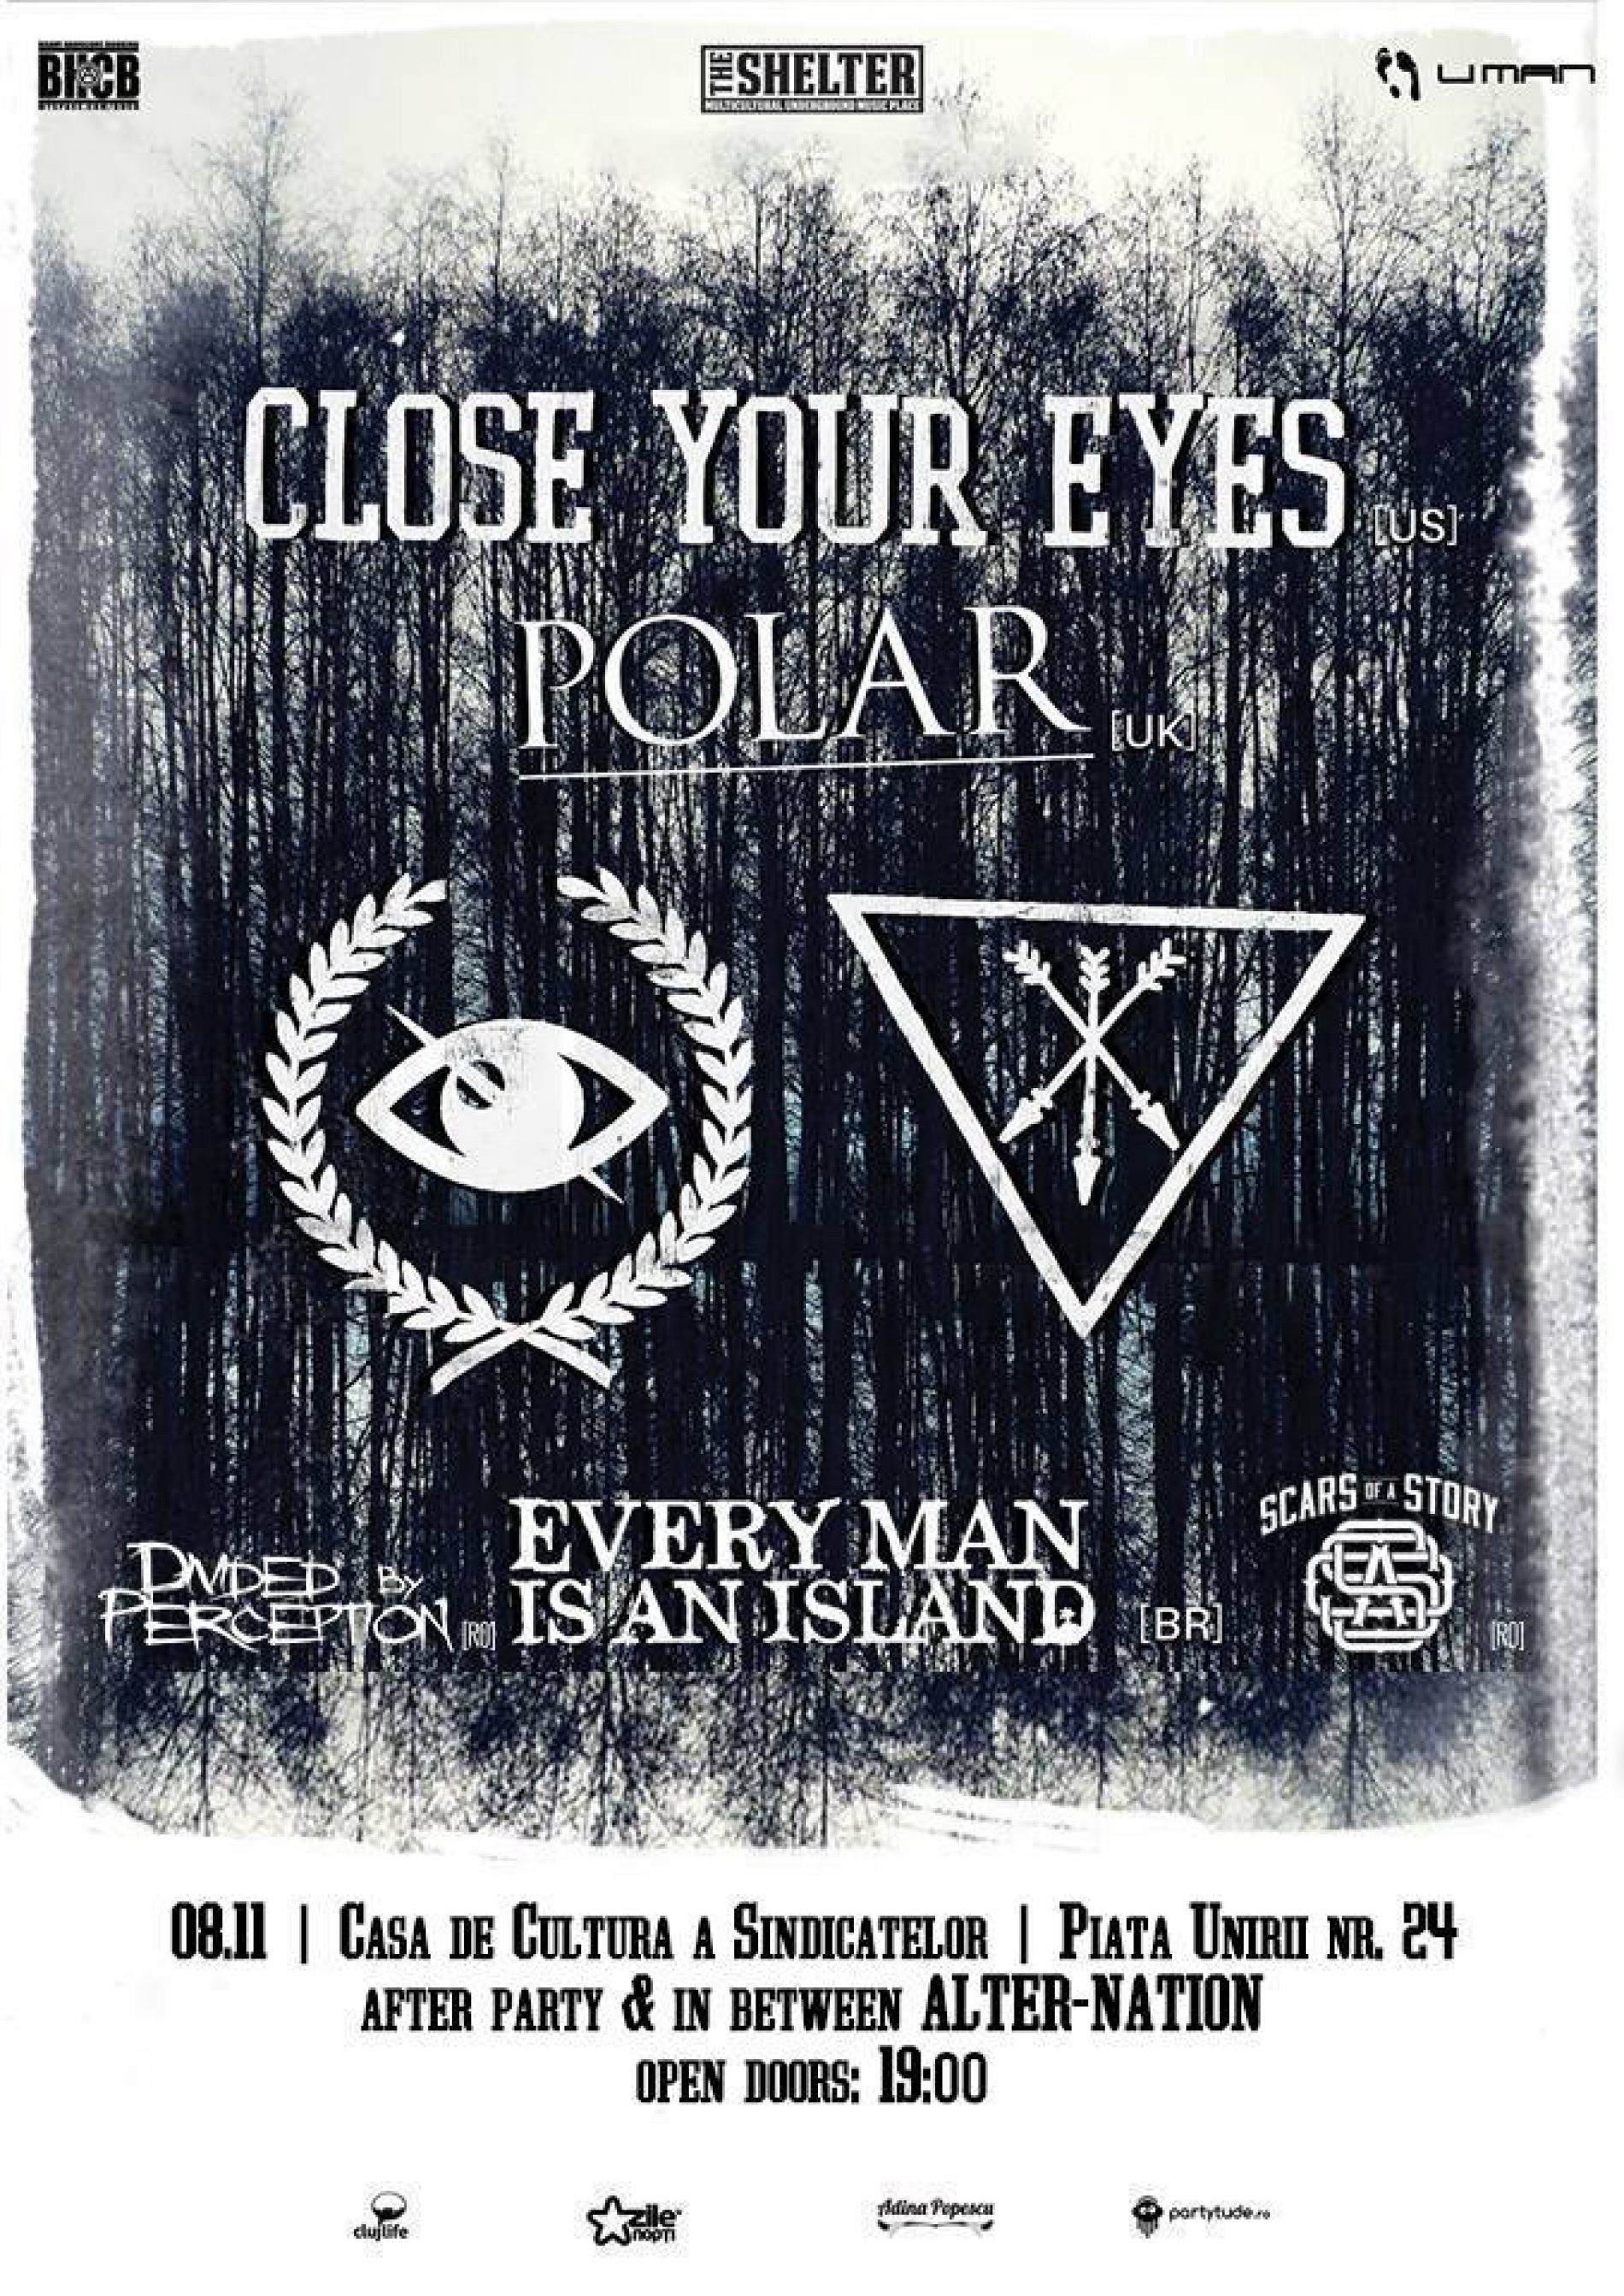 Concert: Polar si Close Your Eyes la Cluj Napoca in noiembrie